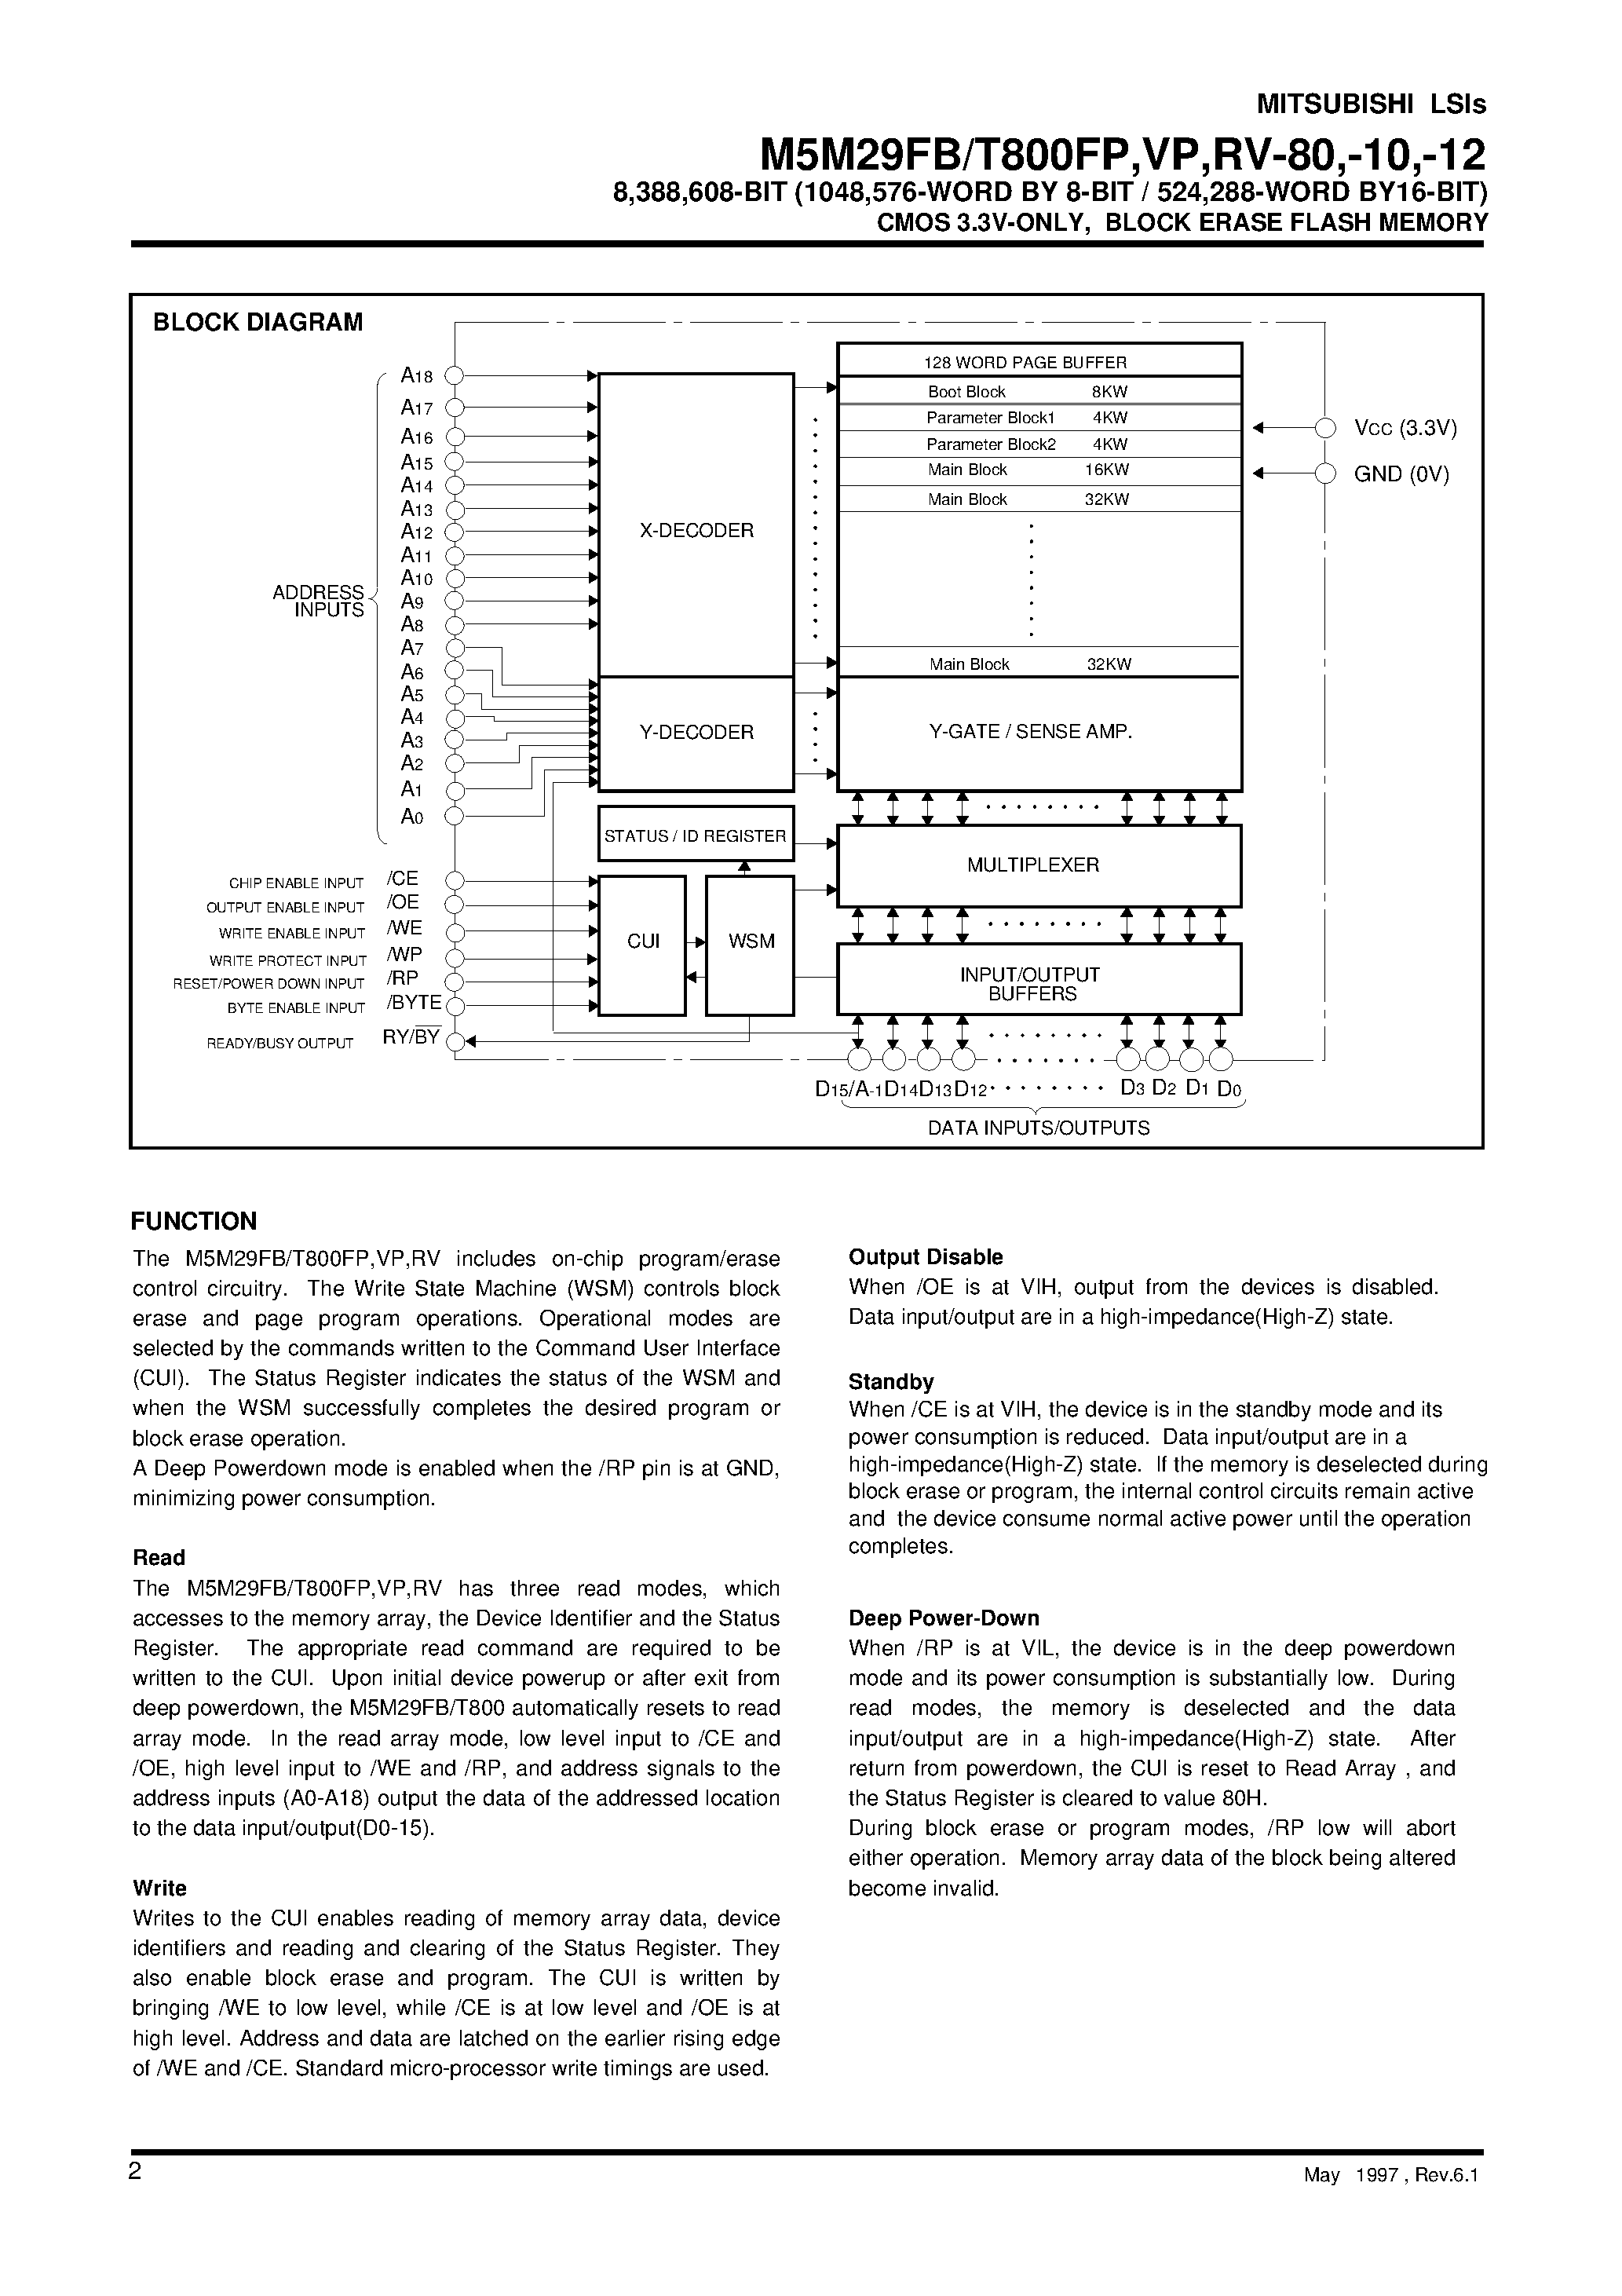 Datasheet M5M29FT800FP - 8 /388 /608-BIT (1048 /576-576-WORD BY 8-BIT / 524 /288-WORD BY16-BIT)CMOS 3.3V-ONLY / BLOCK ERASE FLASH MEMORY page 2